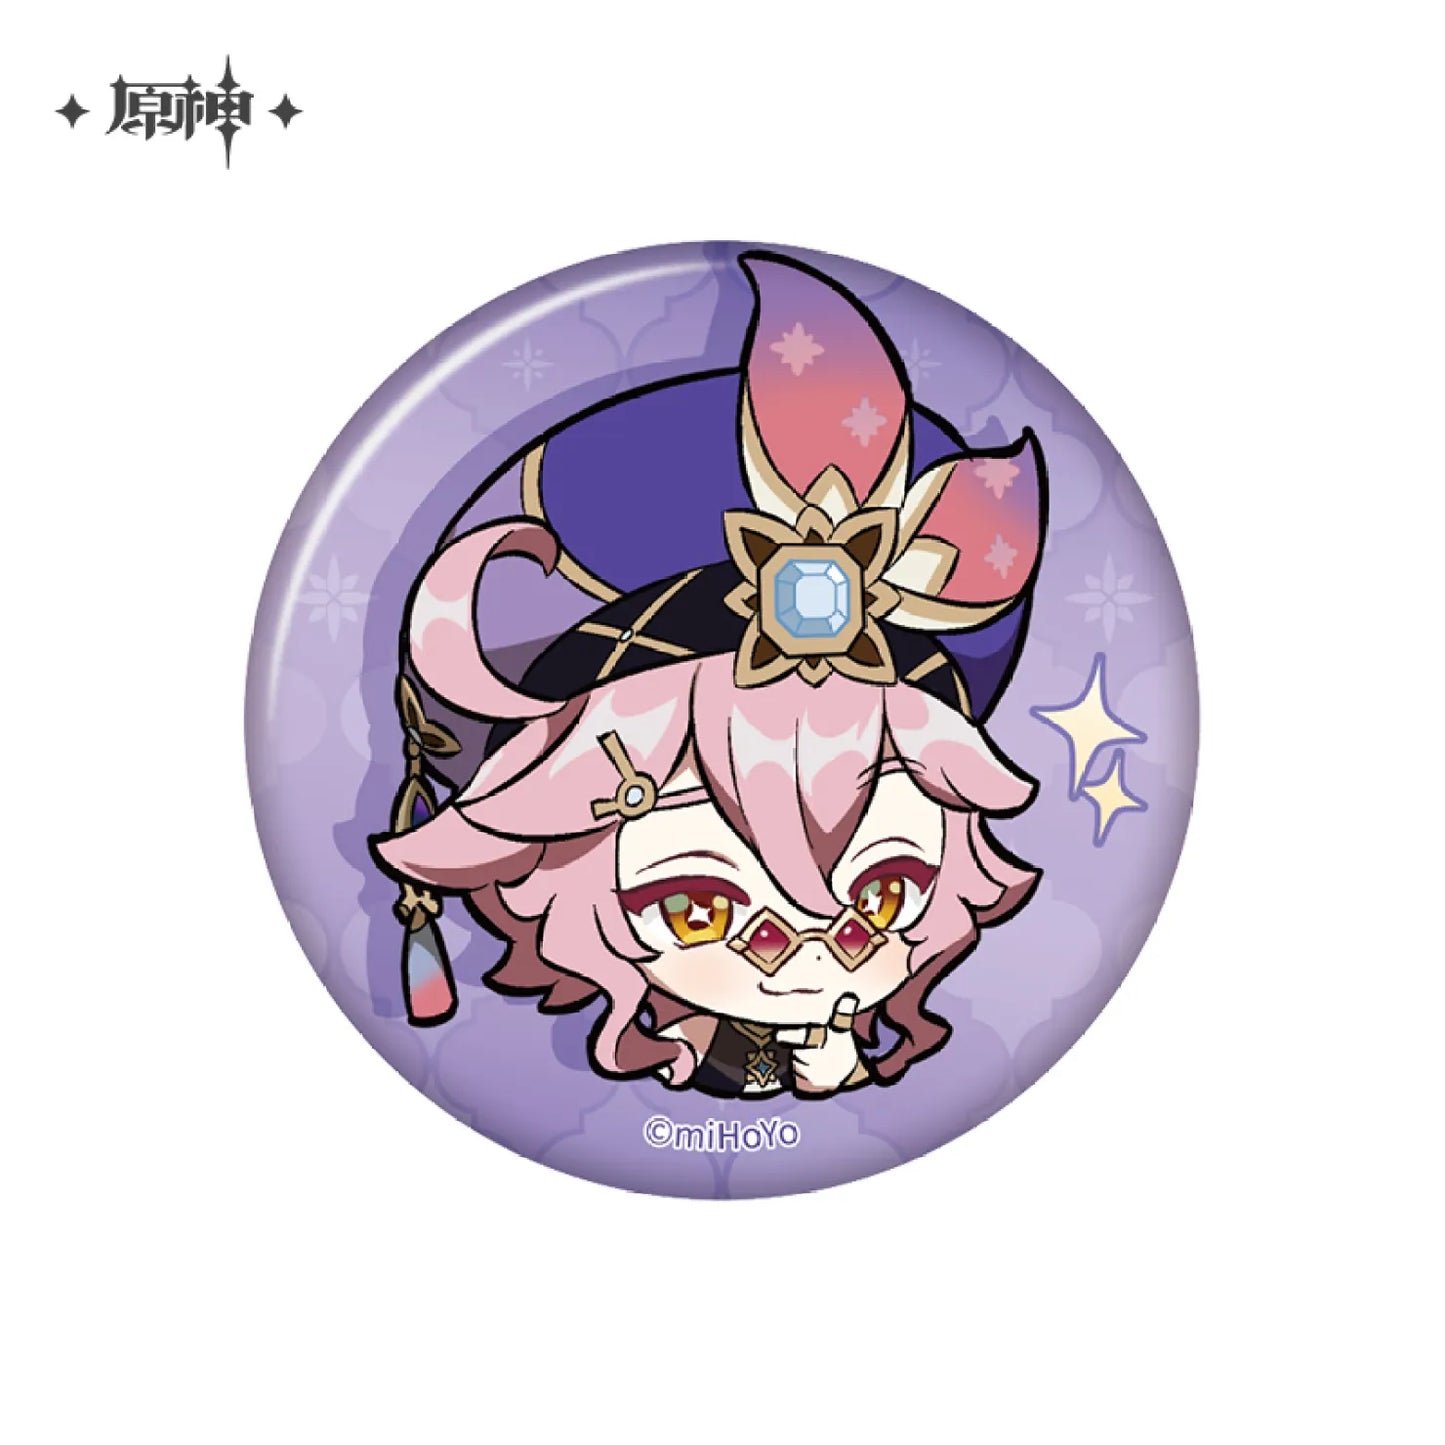 [OFFICIAL MERCHANDISE] Genshin Impact Sumeru Themed Chibi Character Expression Badge